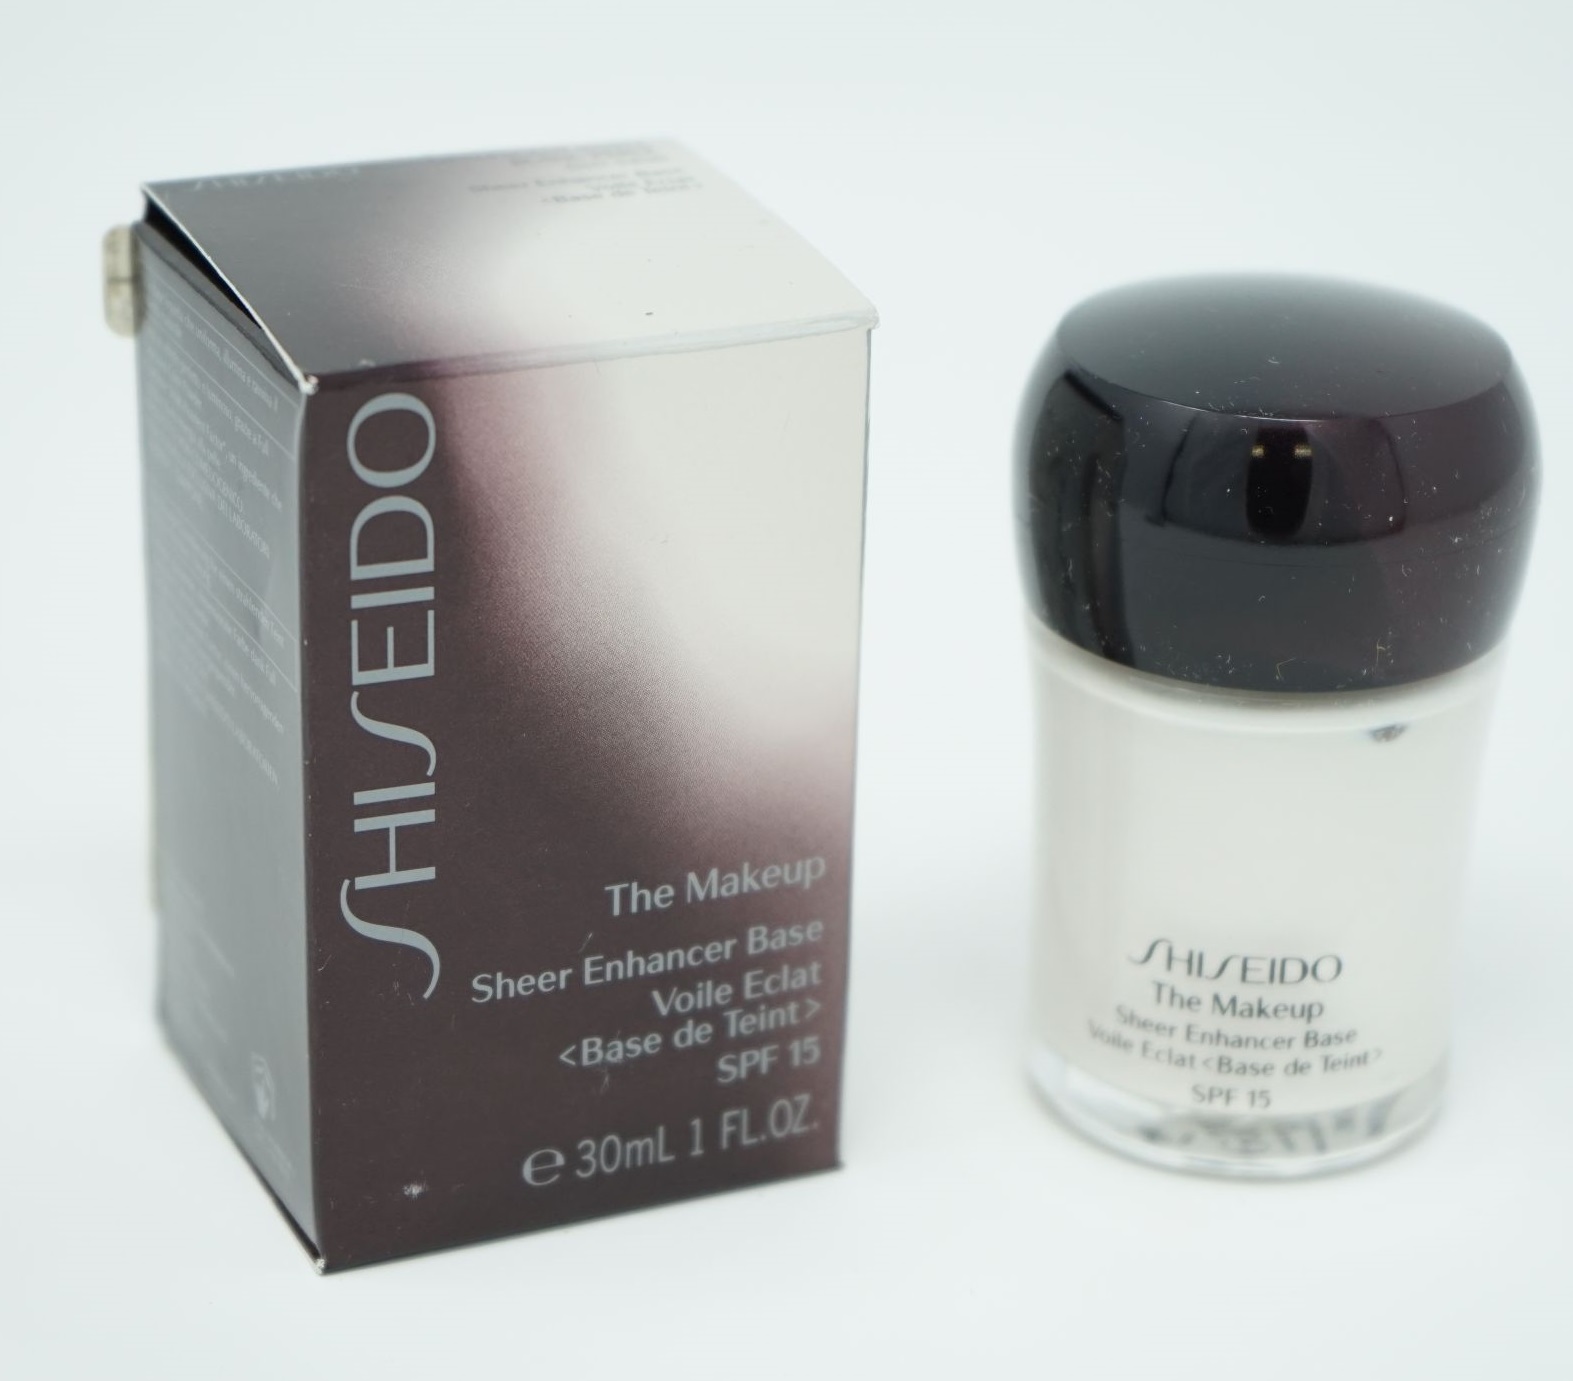 Shiseido The Makeup Grundierung Sheer Enhancer Base 30ml SPF15